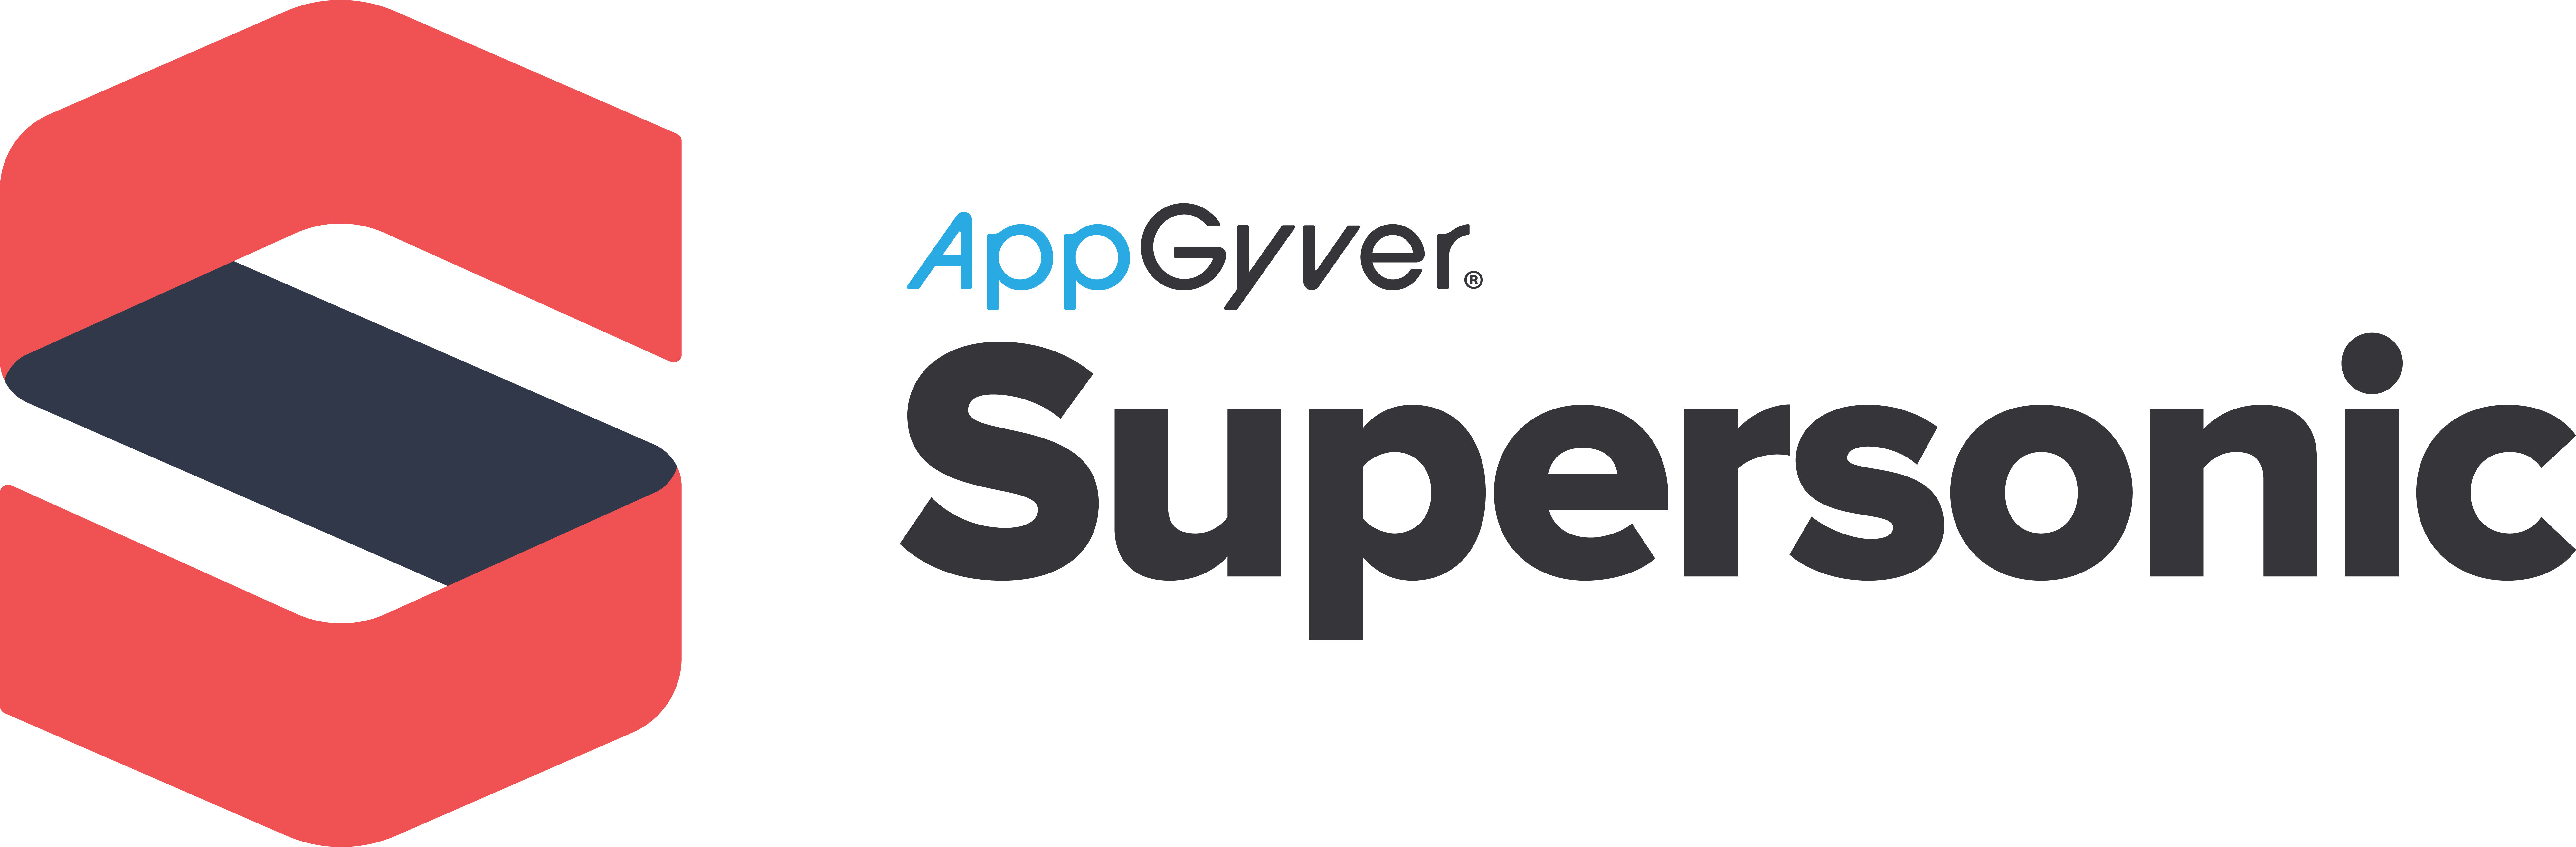 Supersonic Logo - AppGyver: Low-Code Enterprise-Grade App Creation